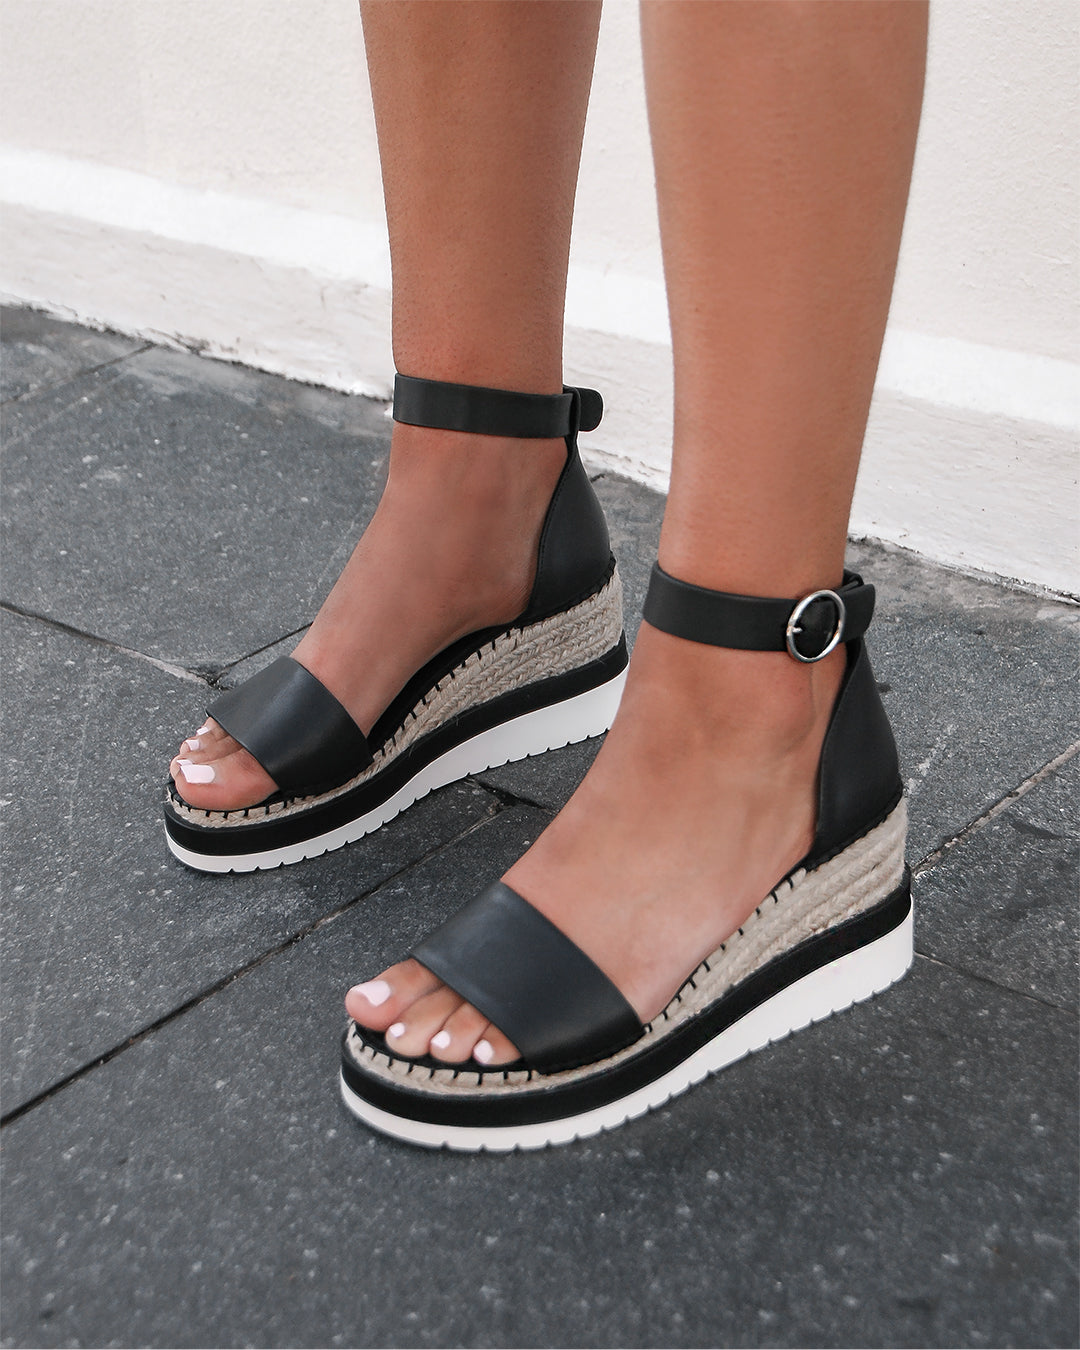 NEW Jo Mercer Klume Mid Heel Wedge Espadrilles Leather Sandals | eBay